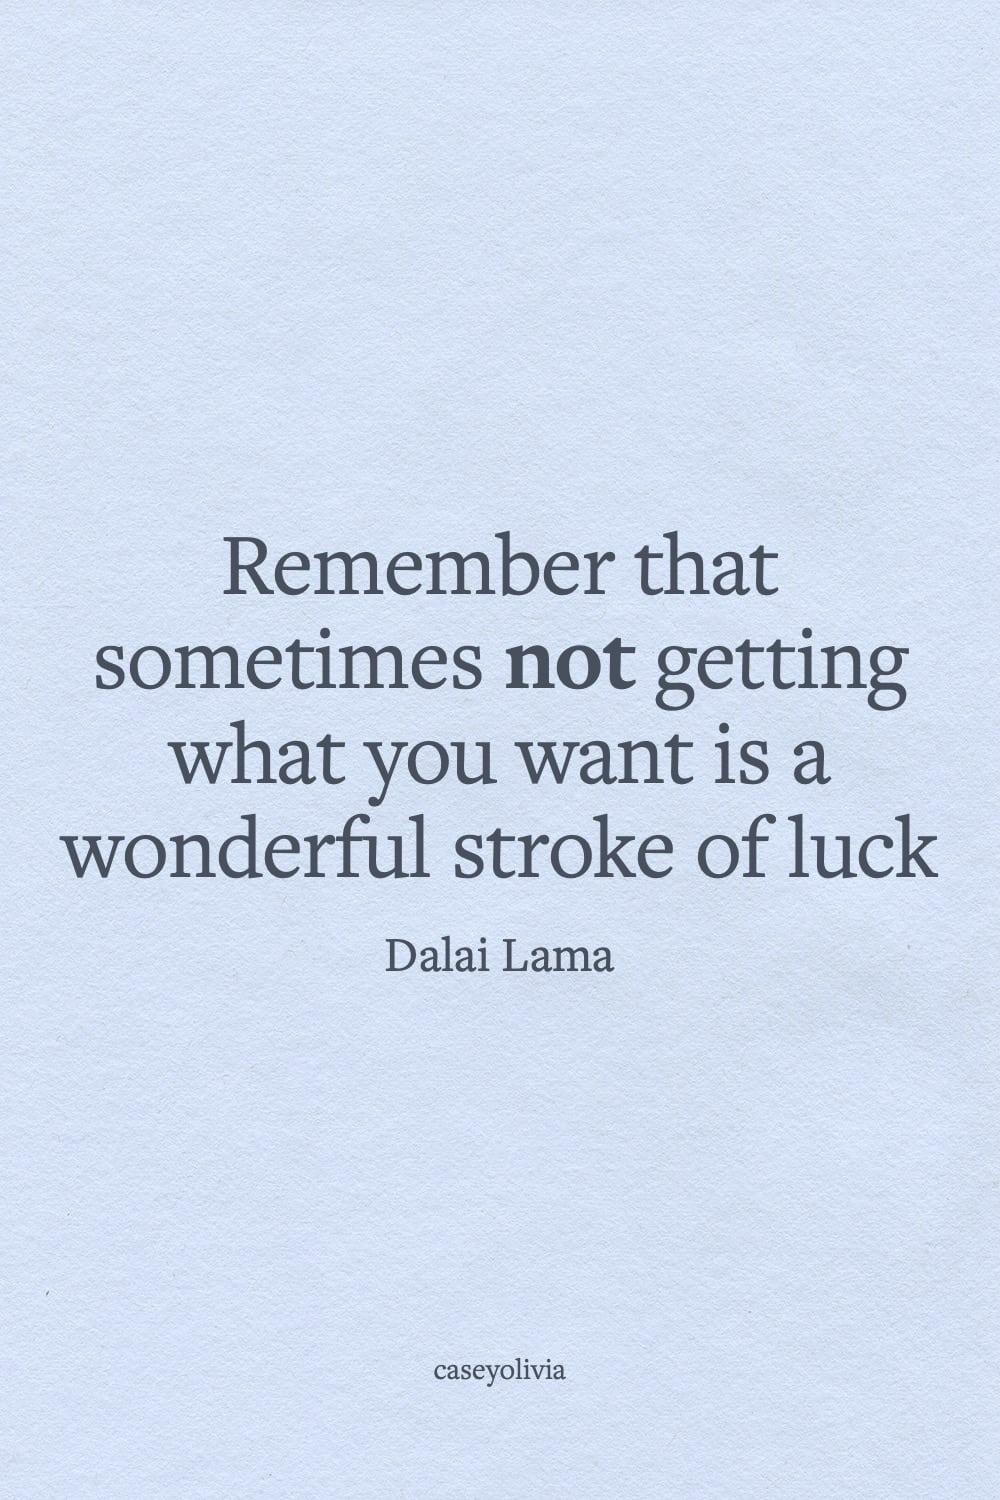 dalai lama stroke of luck saying about optimism